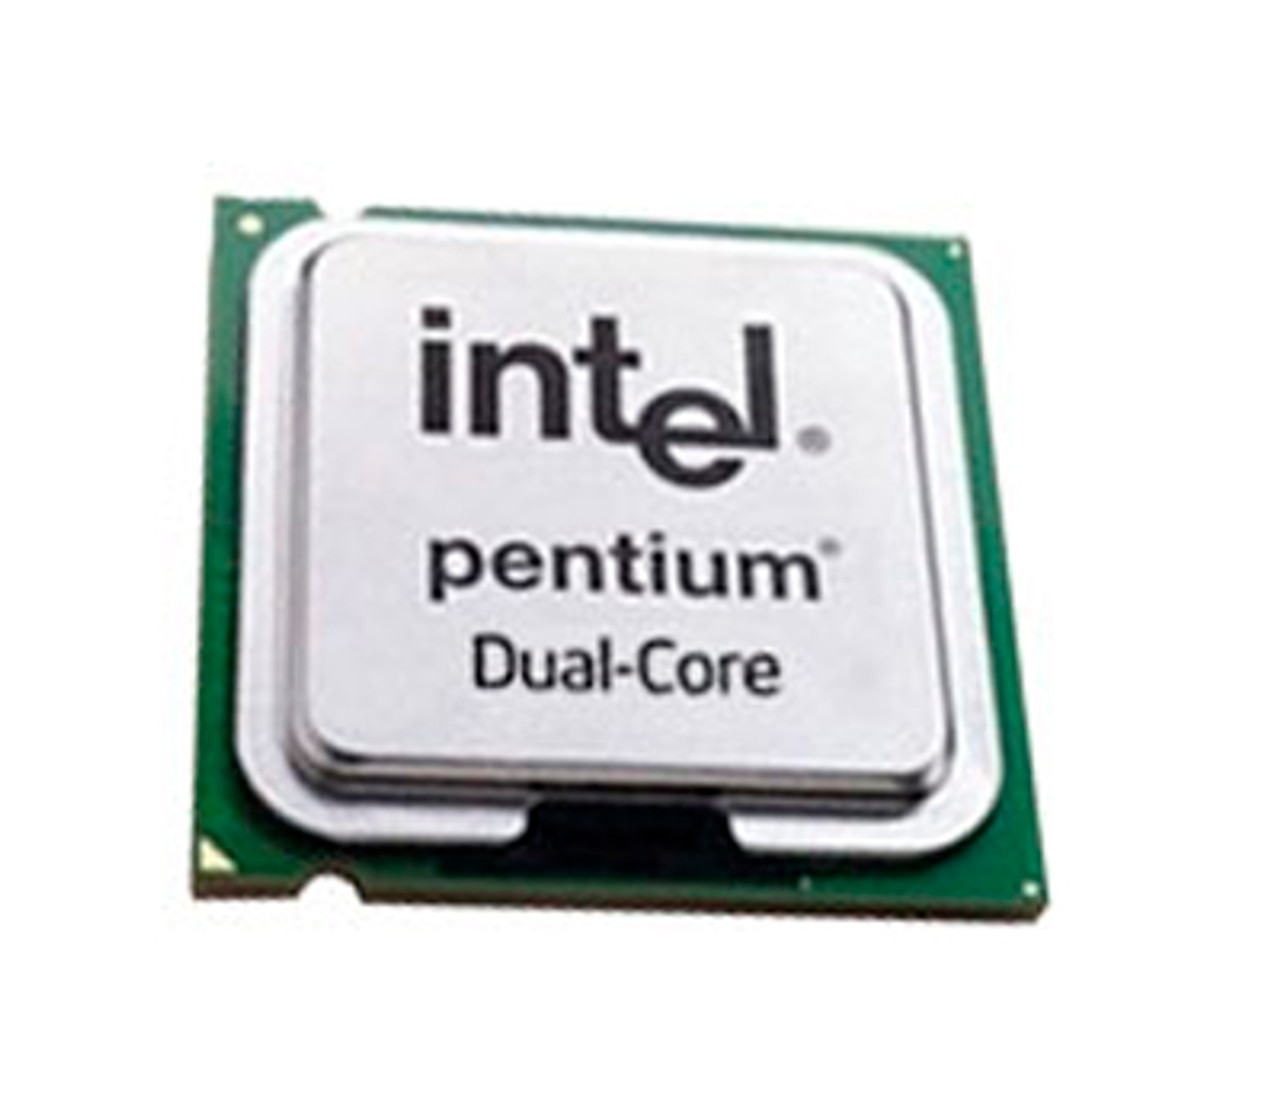 AT80571PH0772ML - Intel PENTIUM Dual Core E6500 2.93GHz 2MB L2 Cache 1066MHz FSB Socket FLGA-775 45NM 65W Desktop Processor